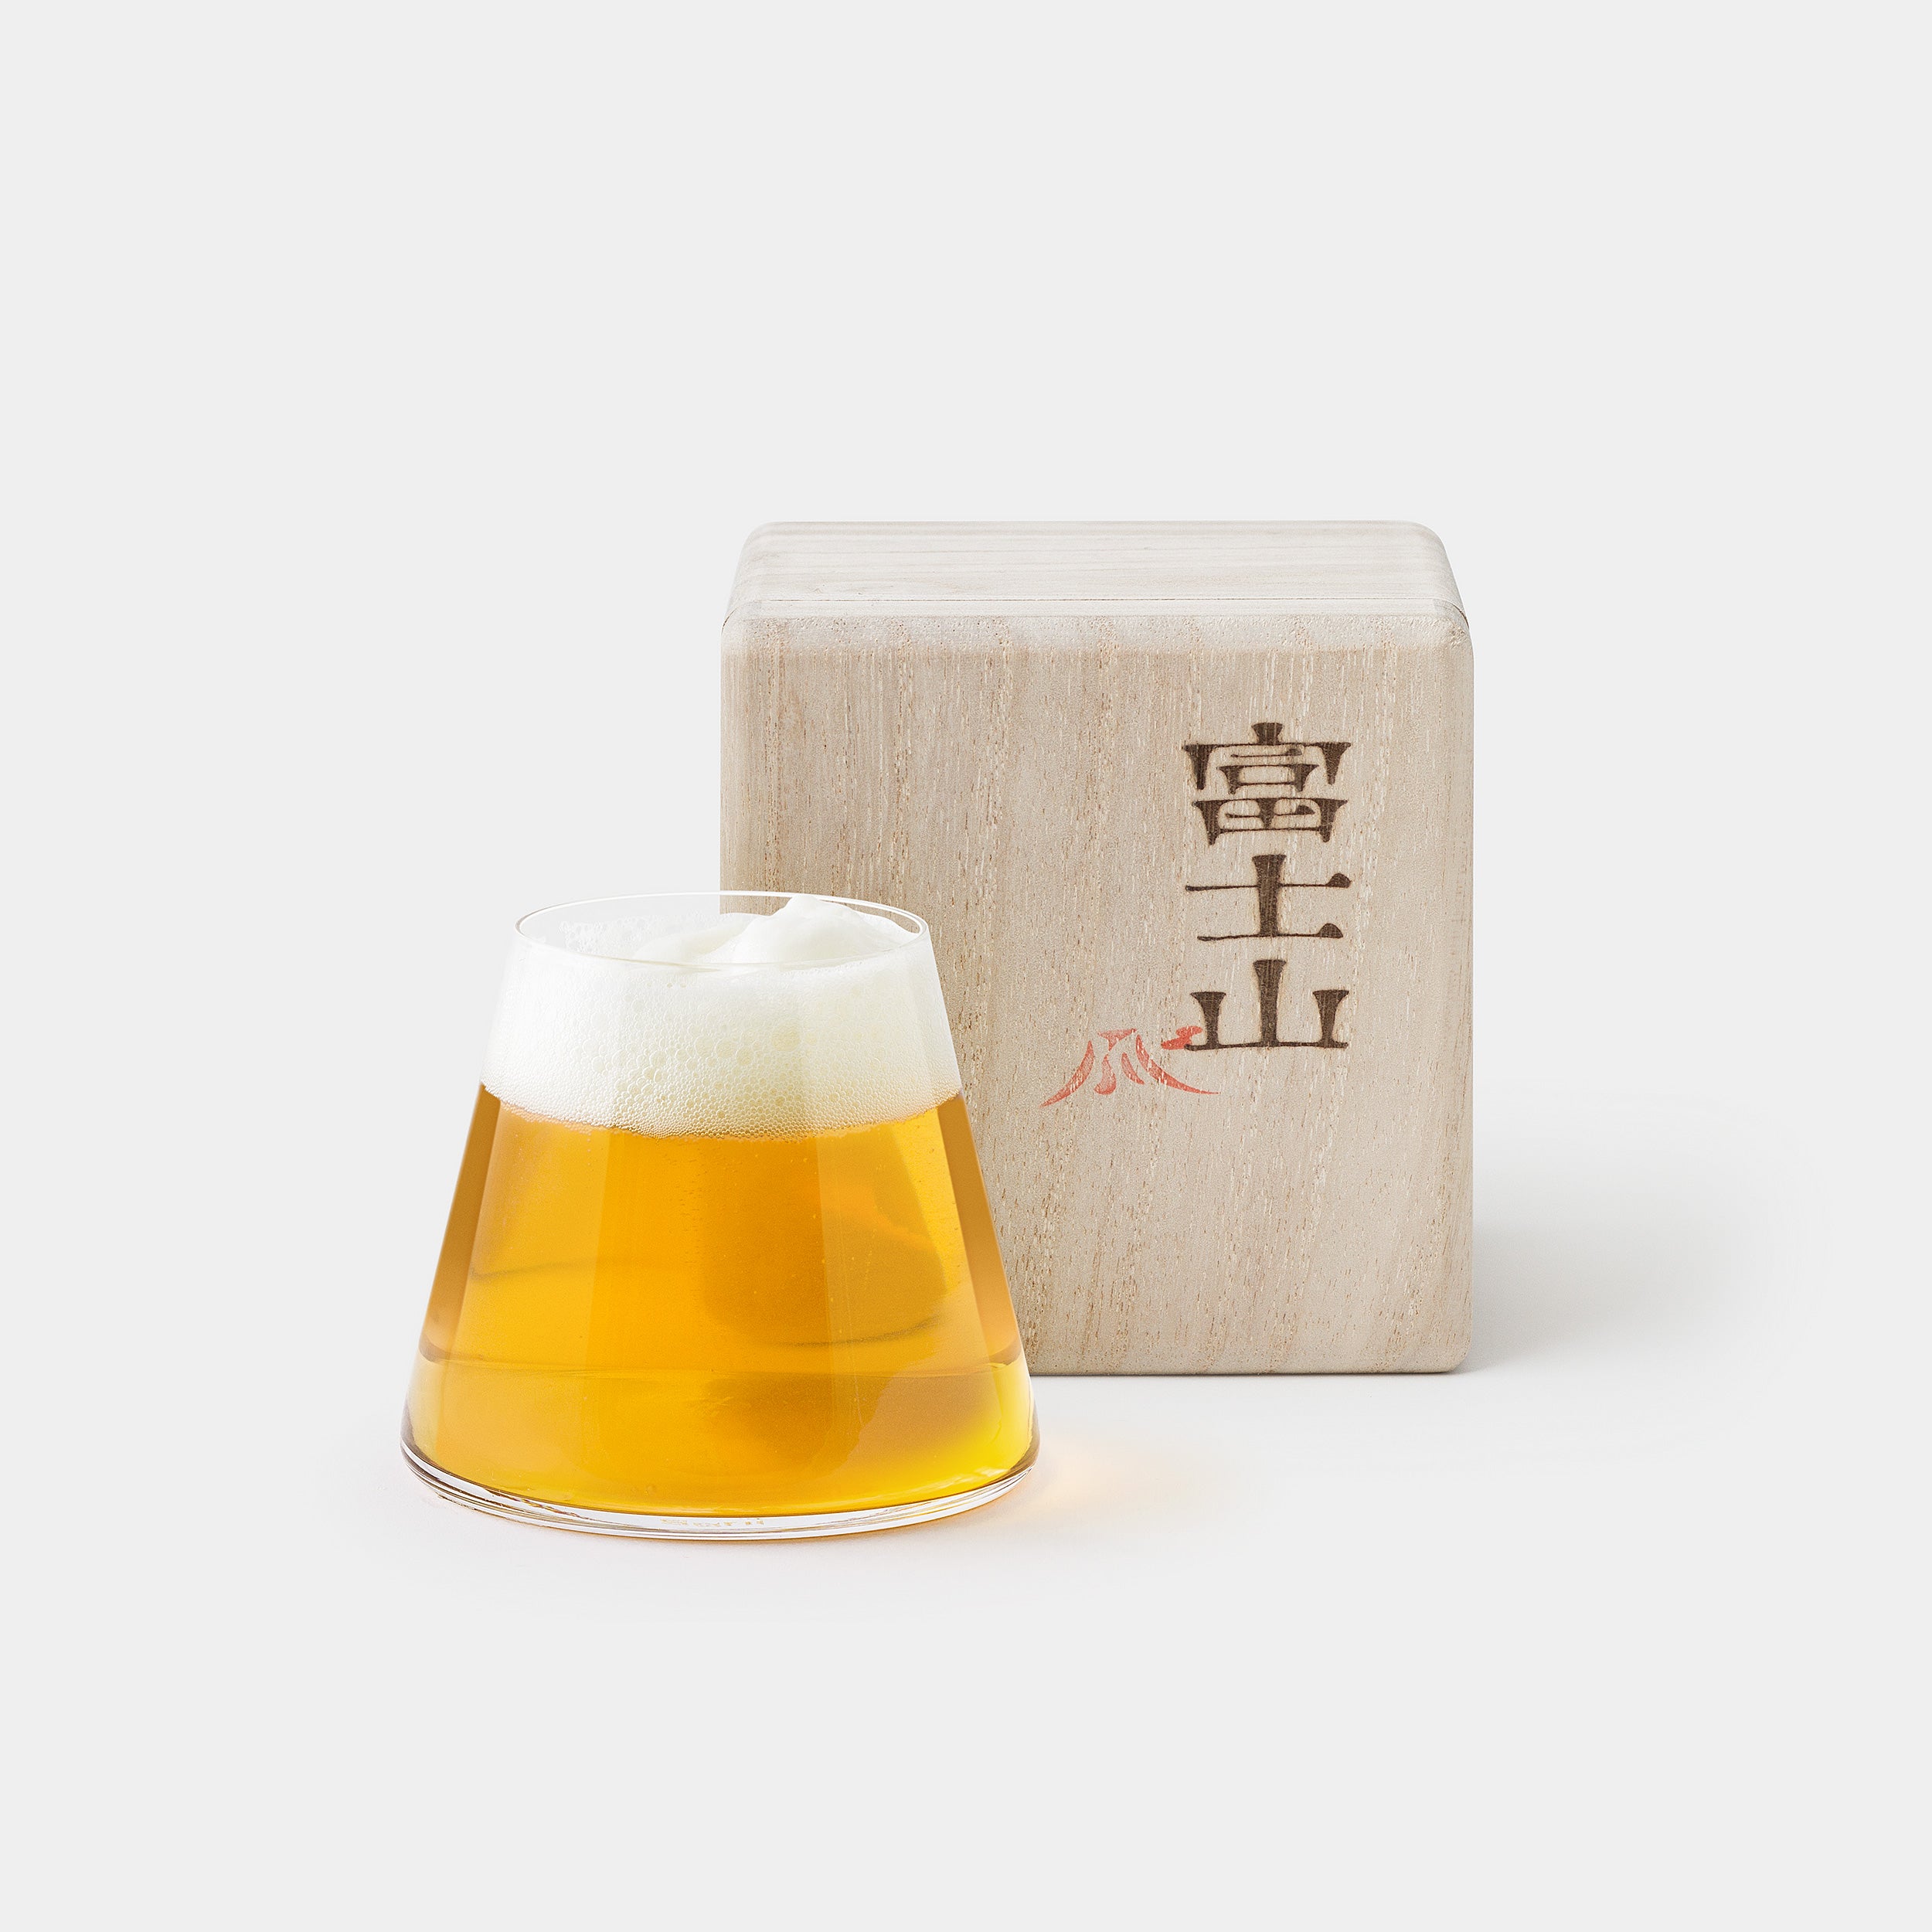 Fujiyama Beer Glass with Box